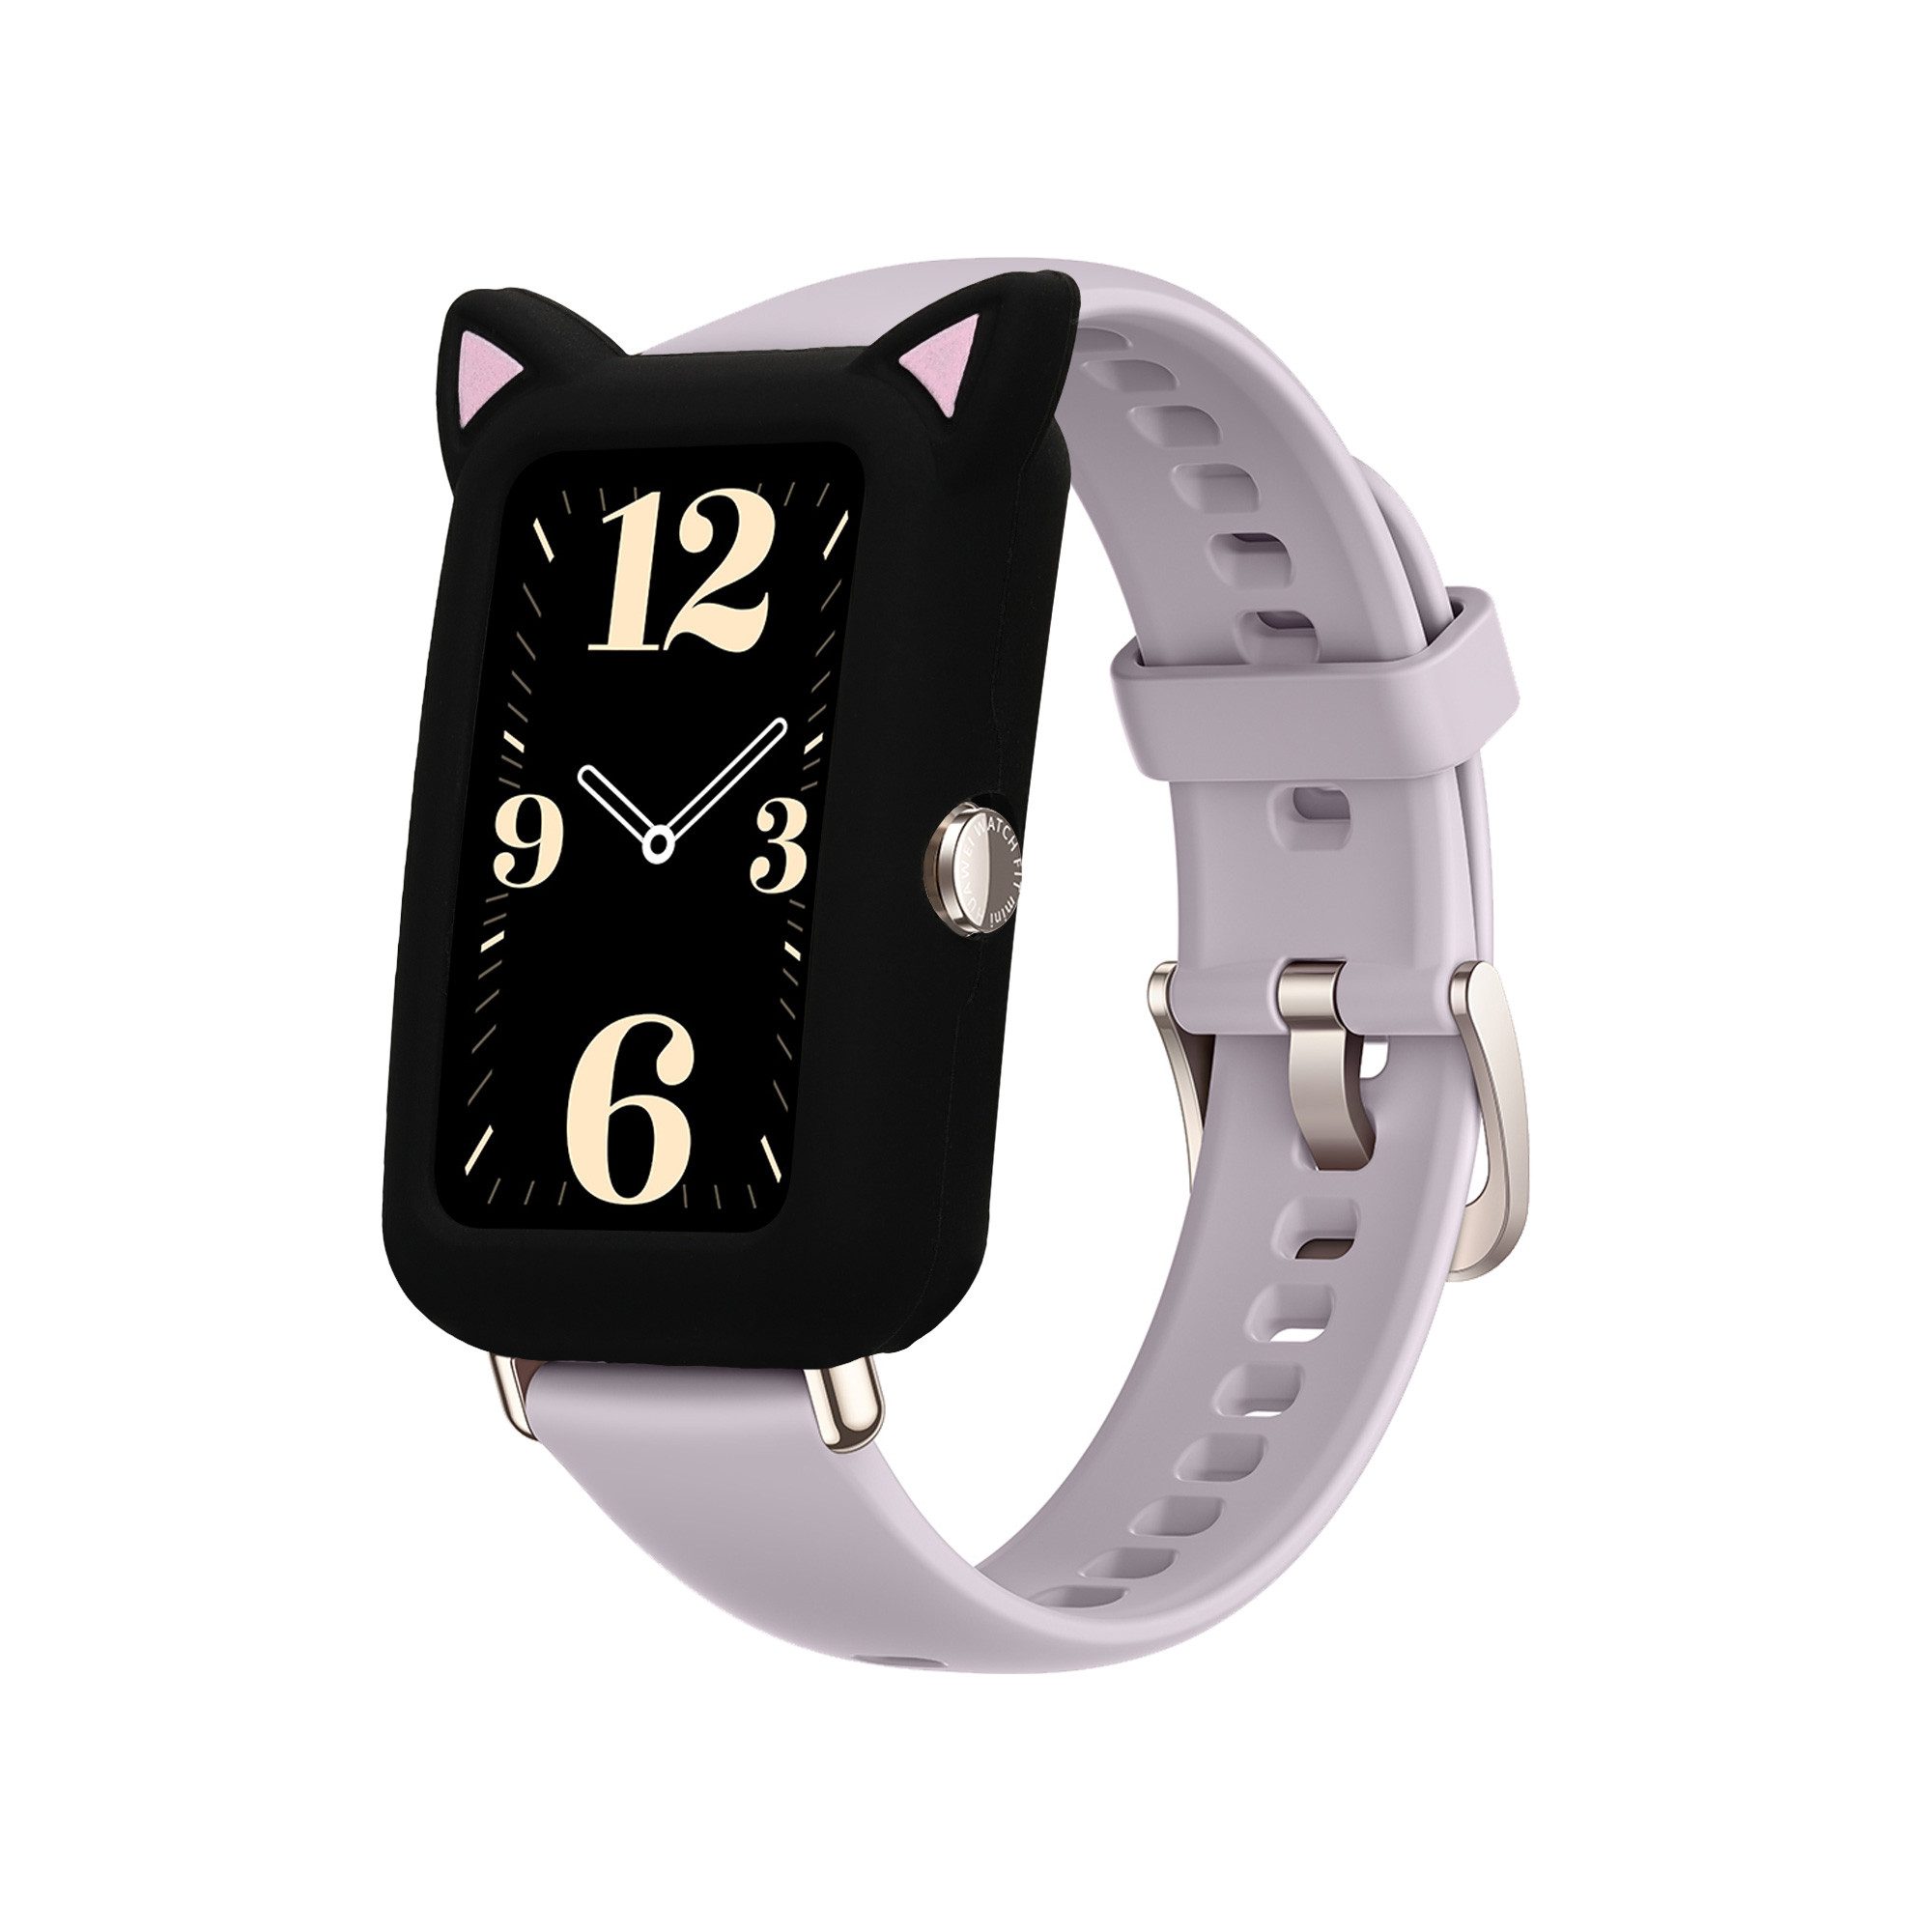 kwmobile Smartwatch-Hülle Schutzhülle für Huawei Watch Fit mini Hülle Bumper, Silikon Rahmen mit Cat Ears - Case ohne Display Schutz